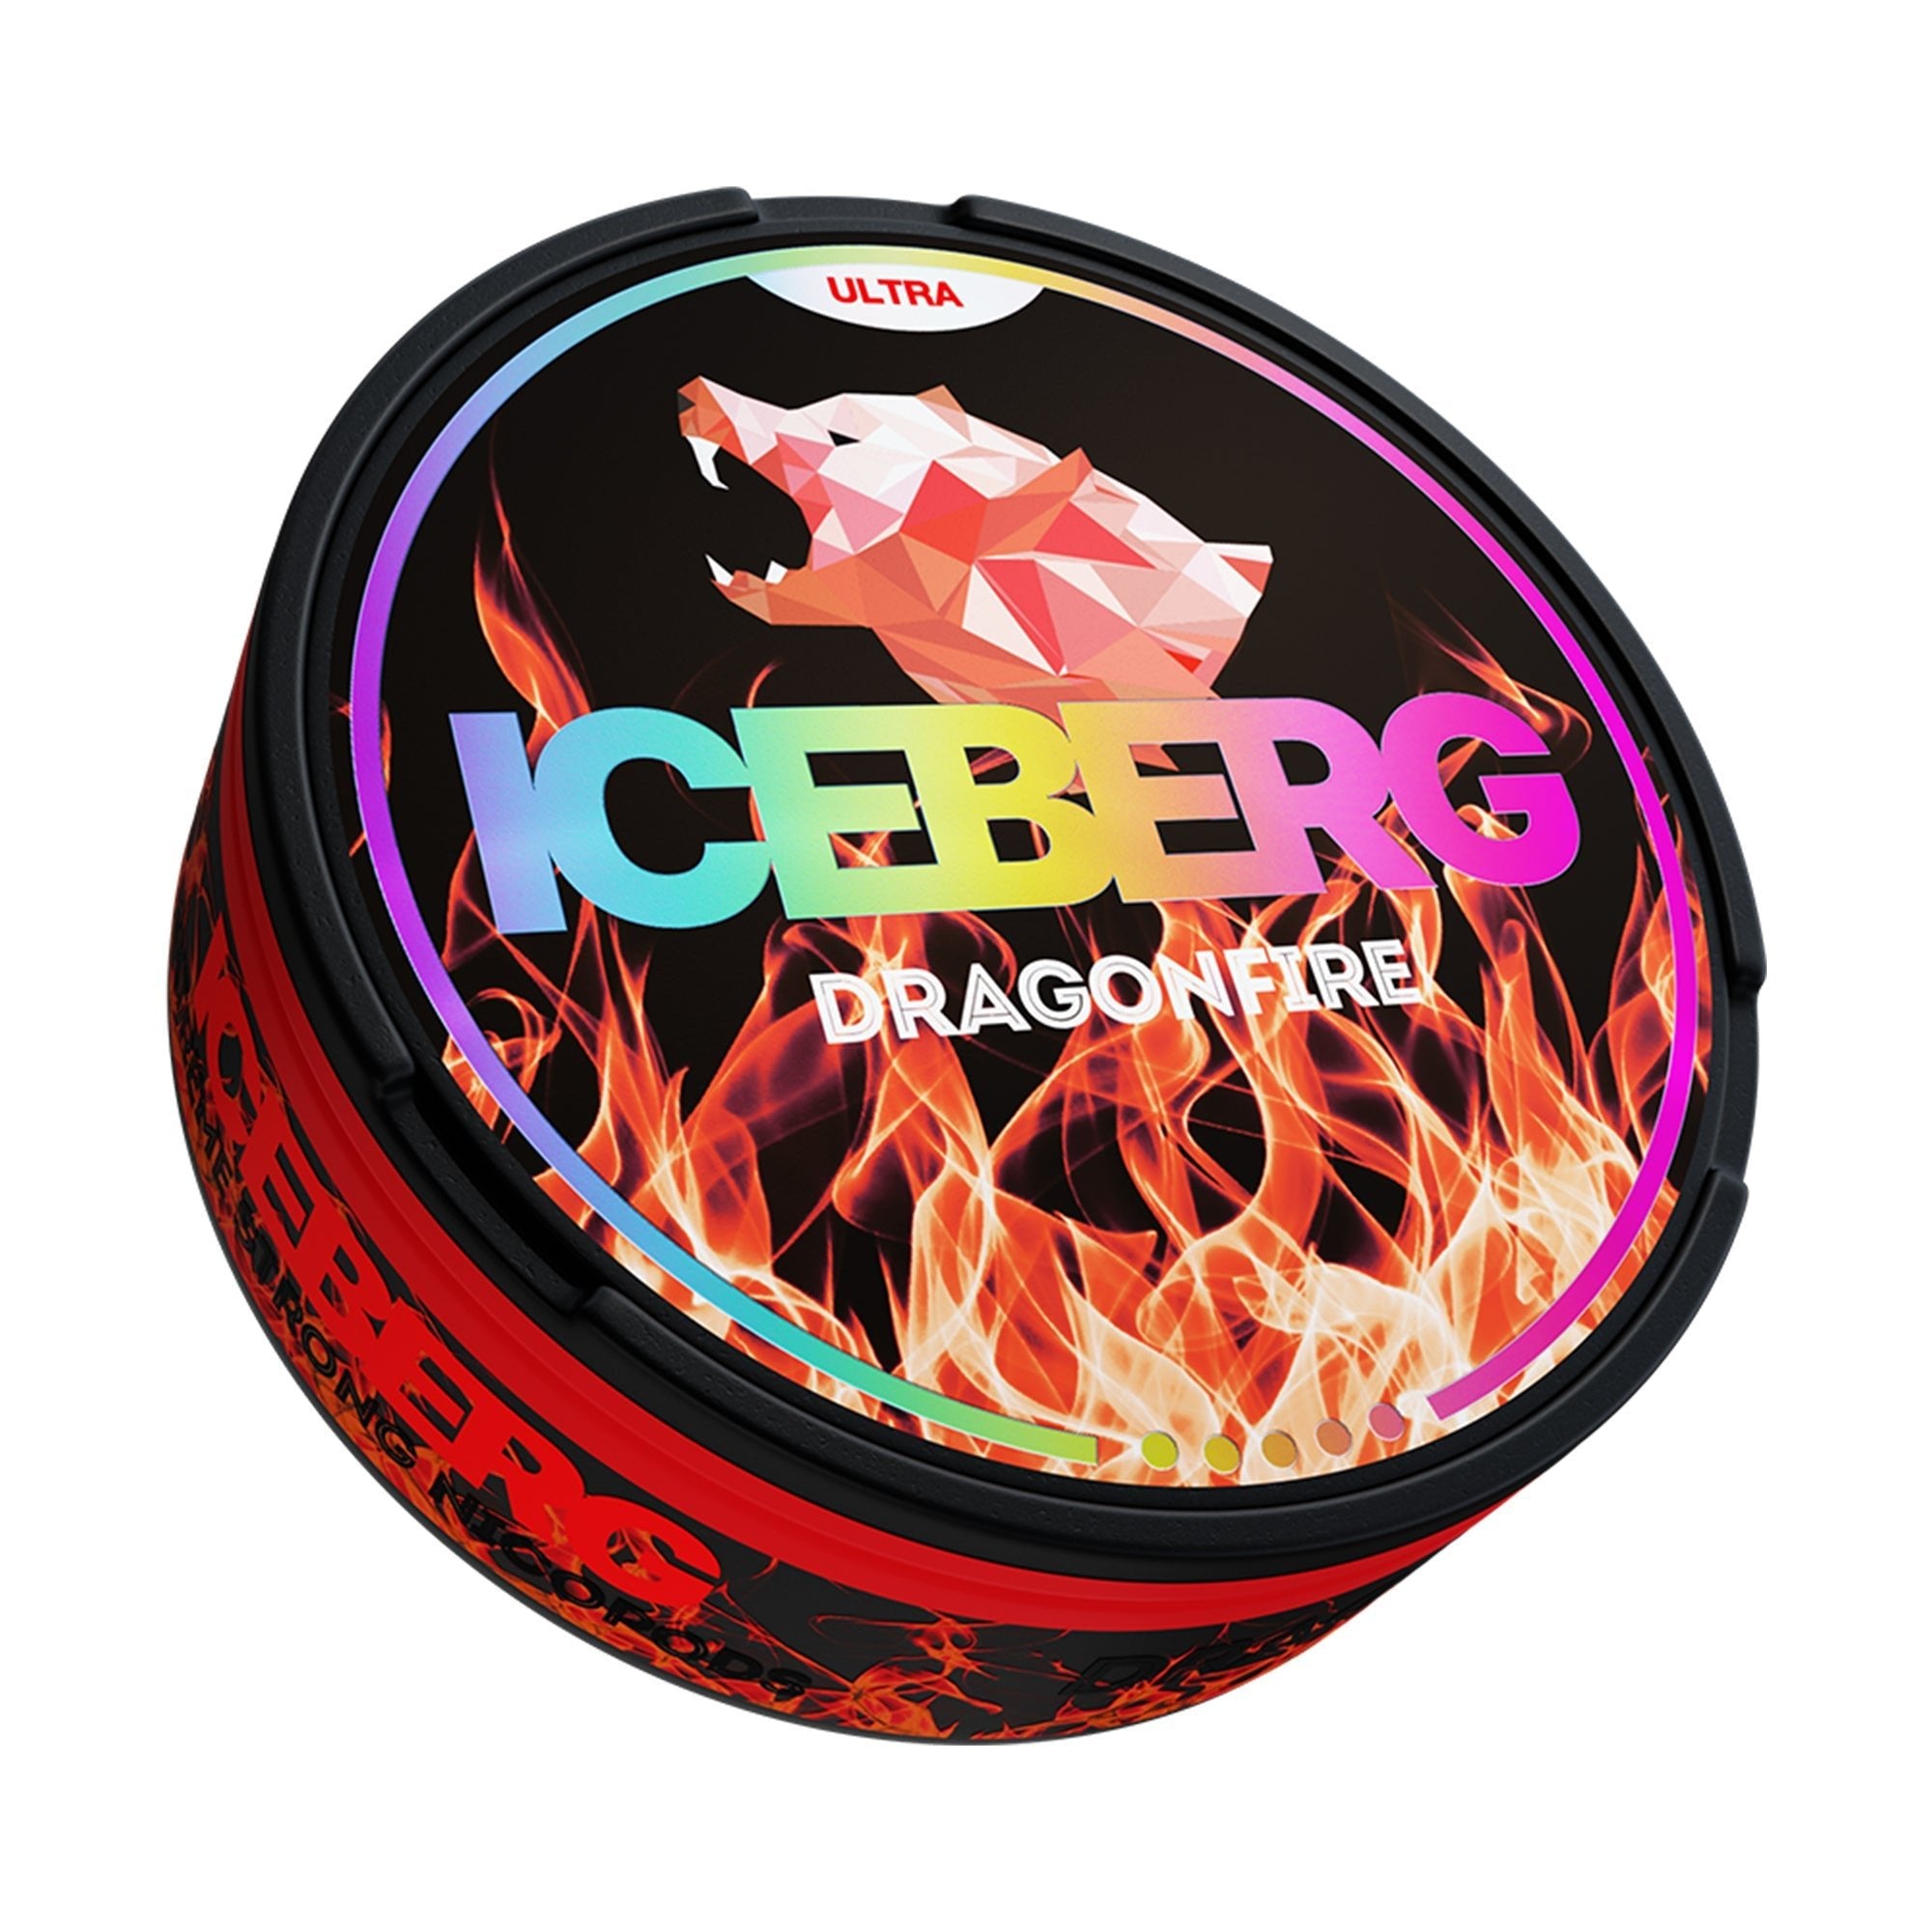 Iceberg Dragon Fire - EUK